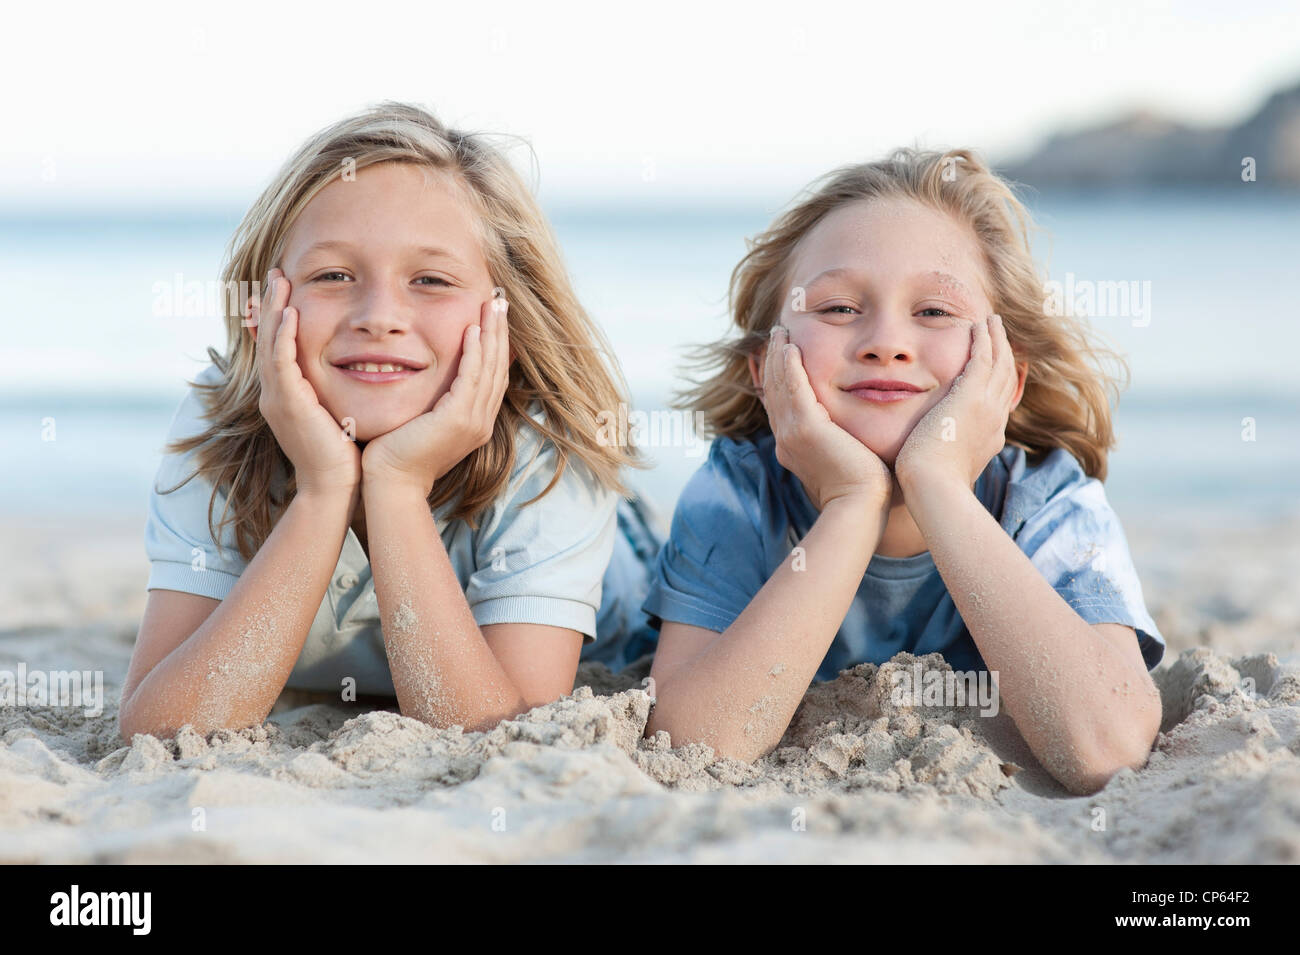 Spain, Mallorca, Children lying in sand on beach, smiling, portrait Stock Photo